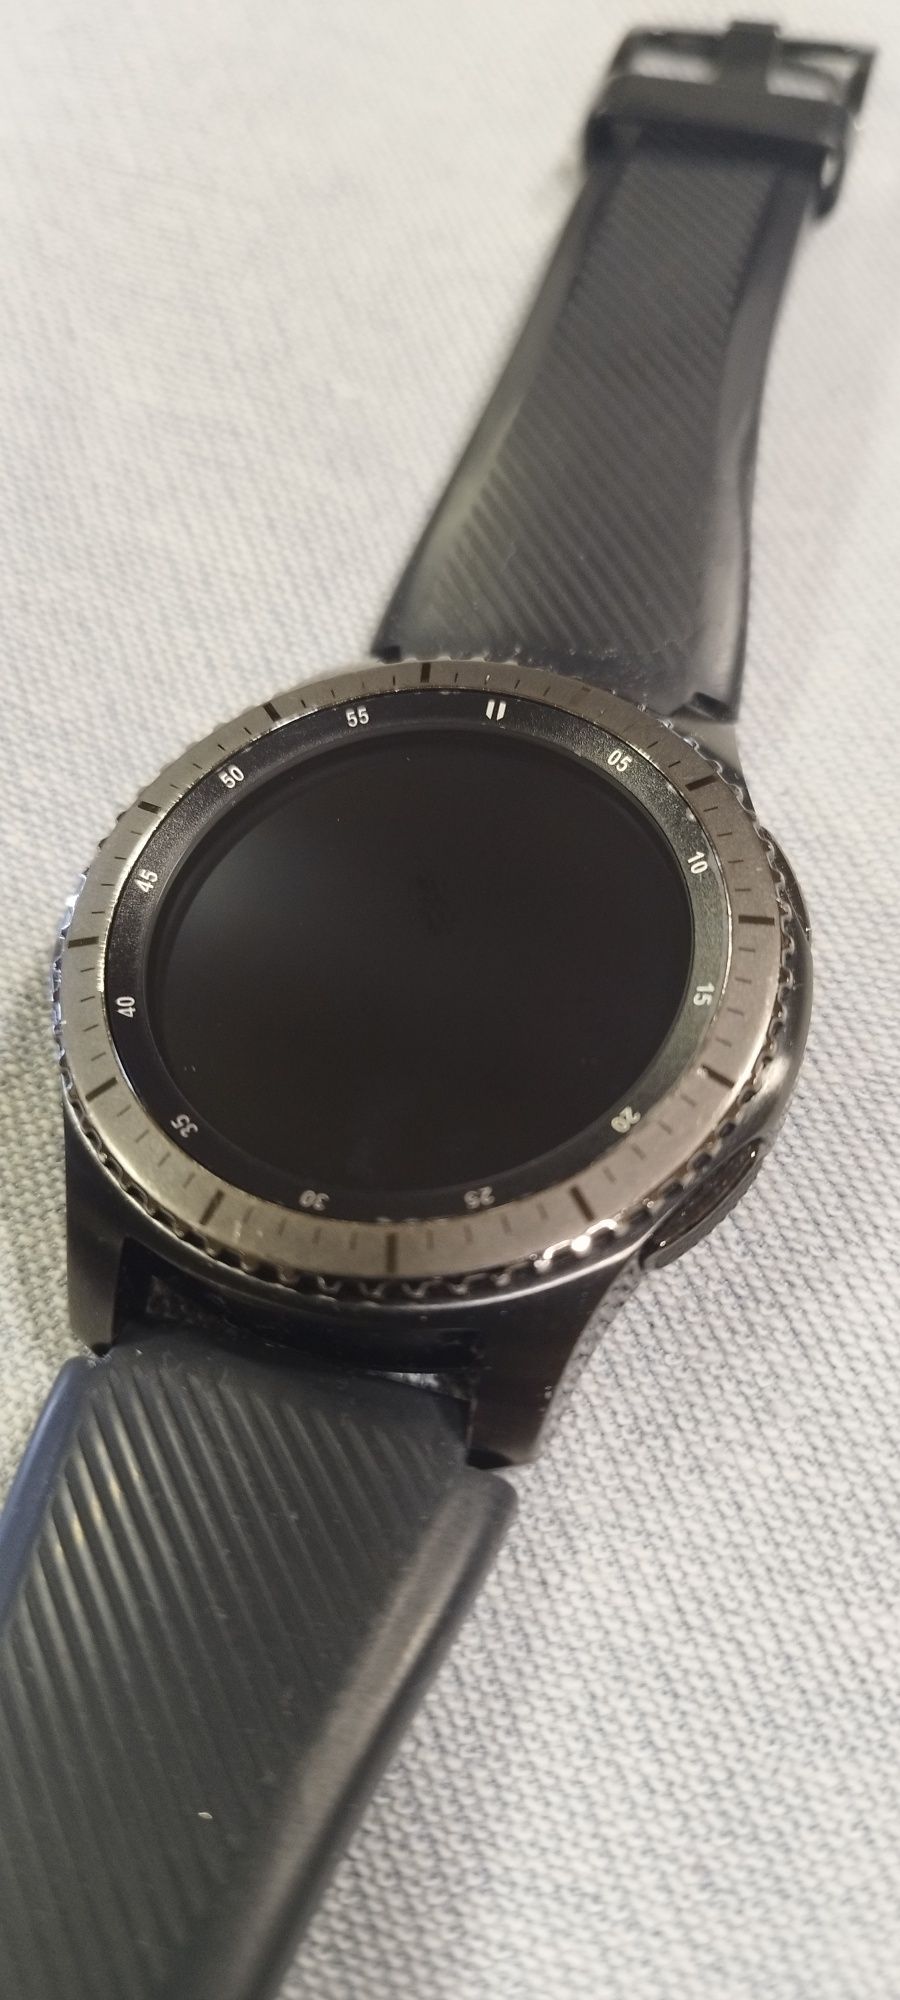 Relógio Samsung Gear S3 Frontier Original como novo!